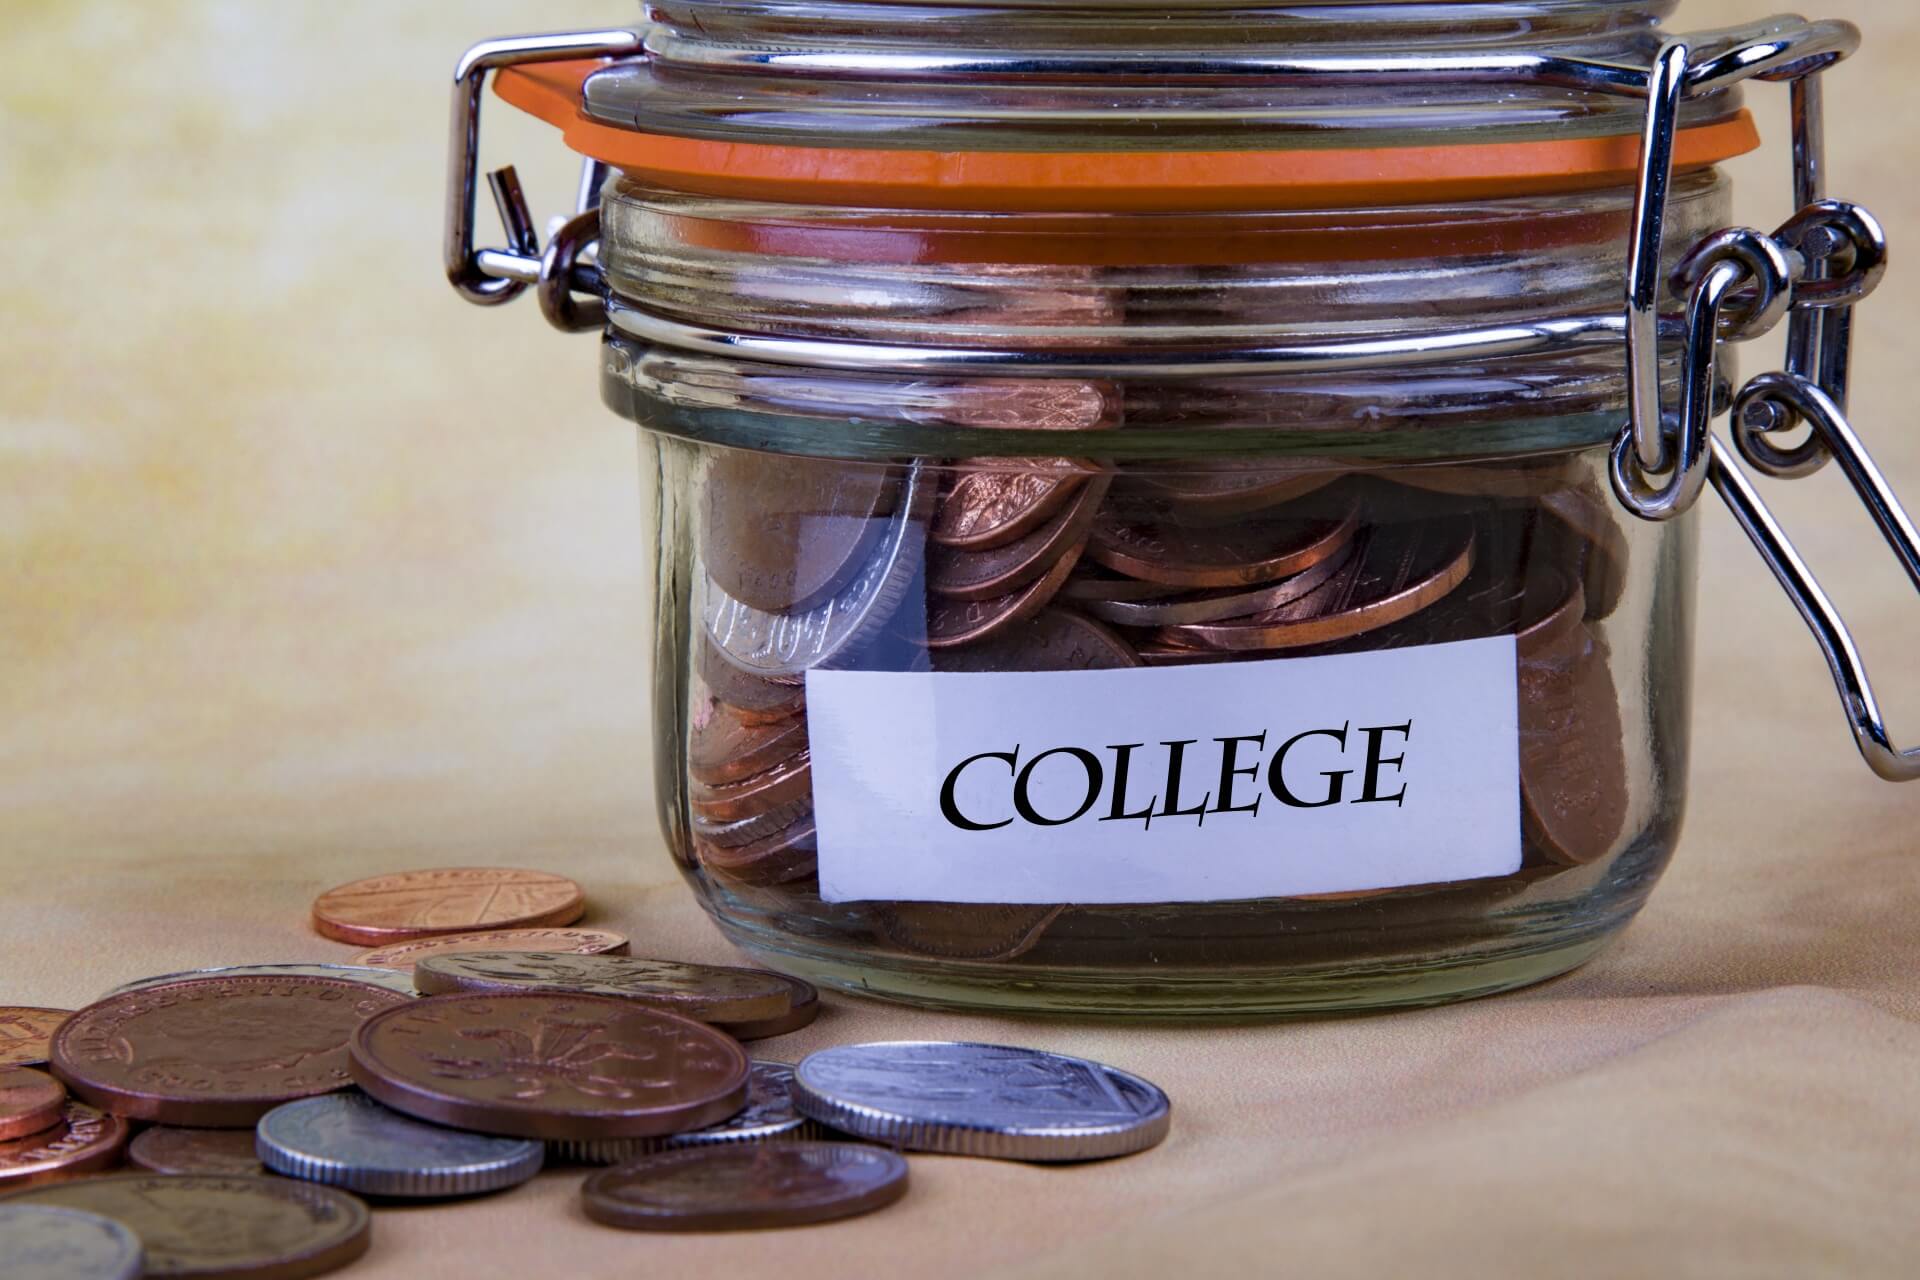 Cost of higher education - College savings jar